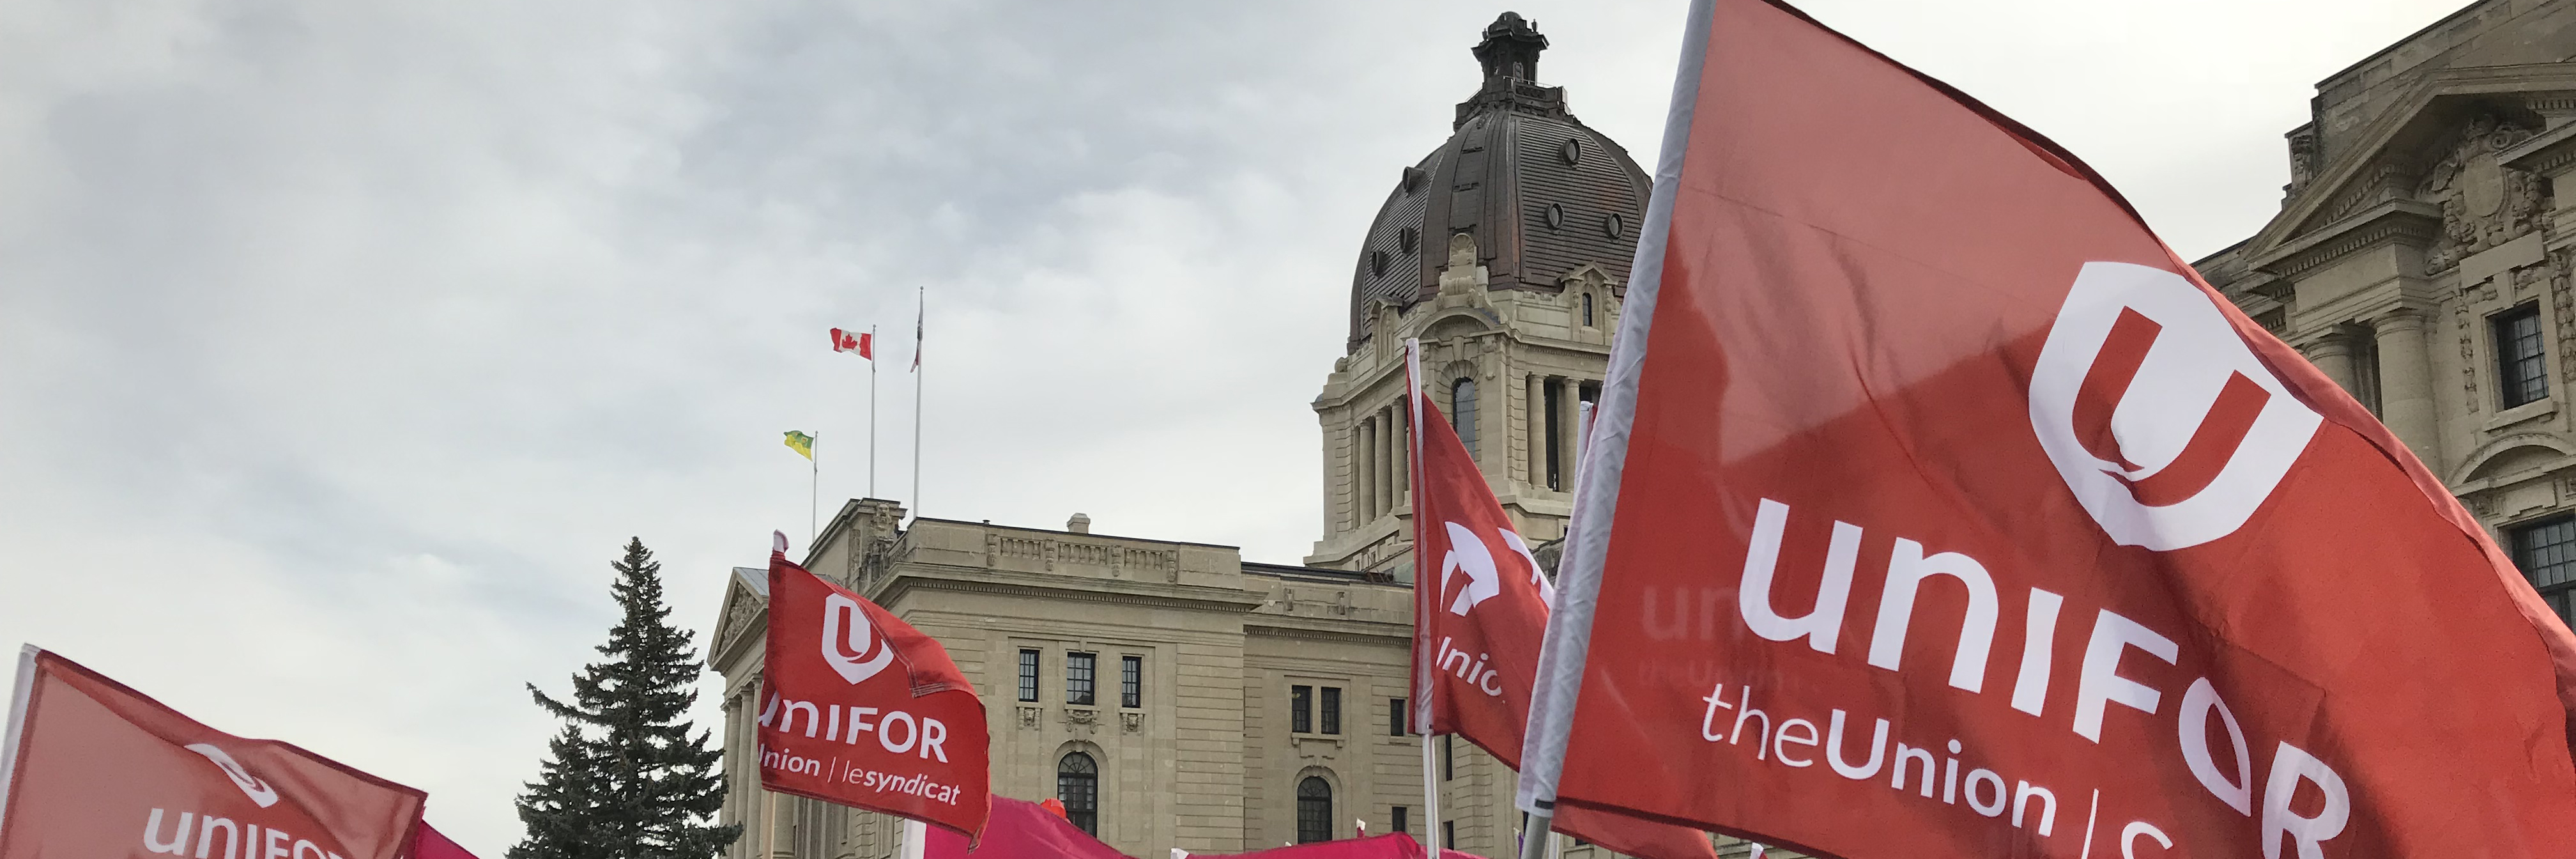 Unifor flags wave in front of the Saskatchewan legislature building.